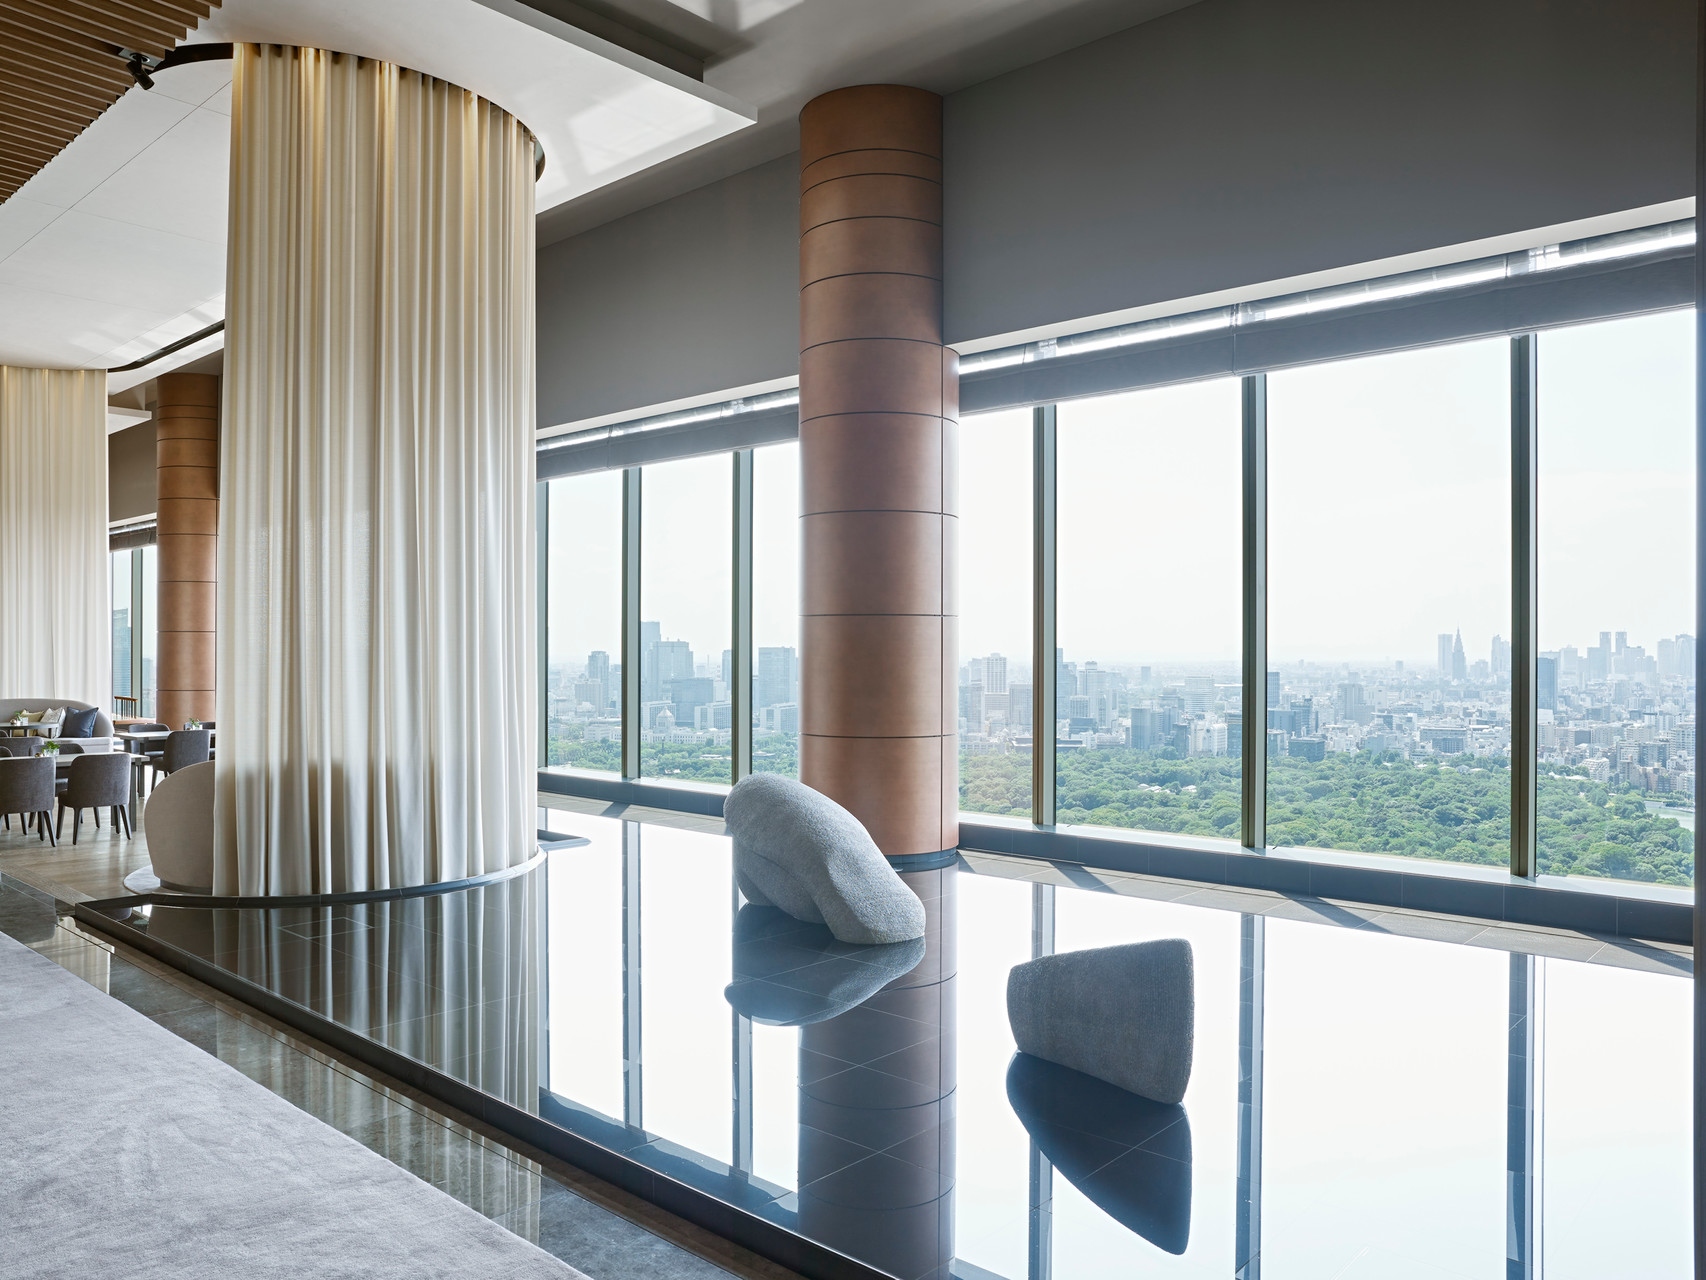 Jean-Michel 在東京大手町四季酒店設計中巧妙地展現純正日本元素，同時融入四季品牌最精緻的特色與 DNA。